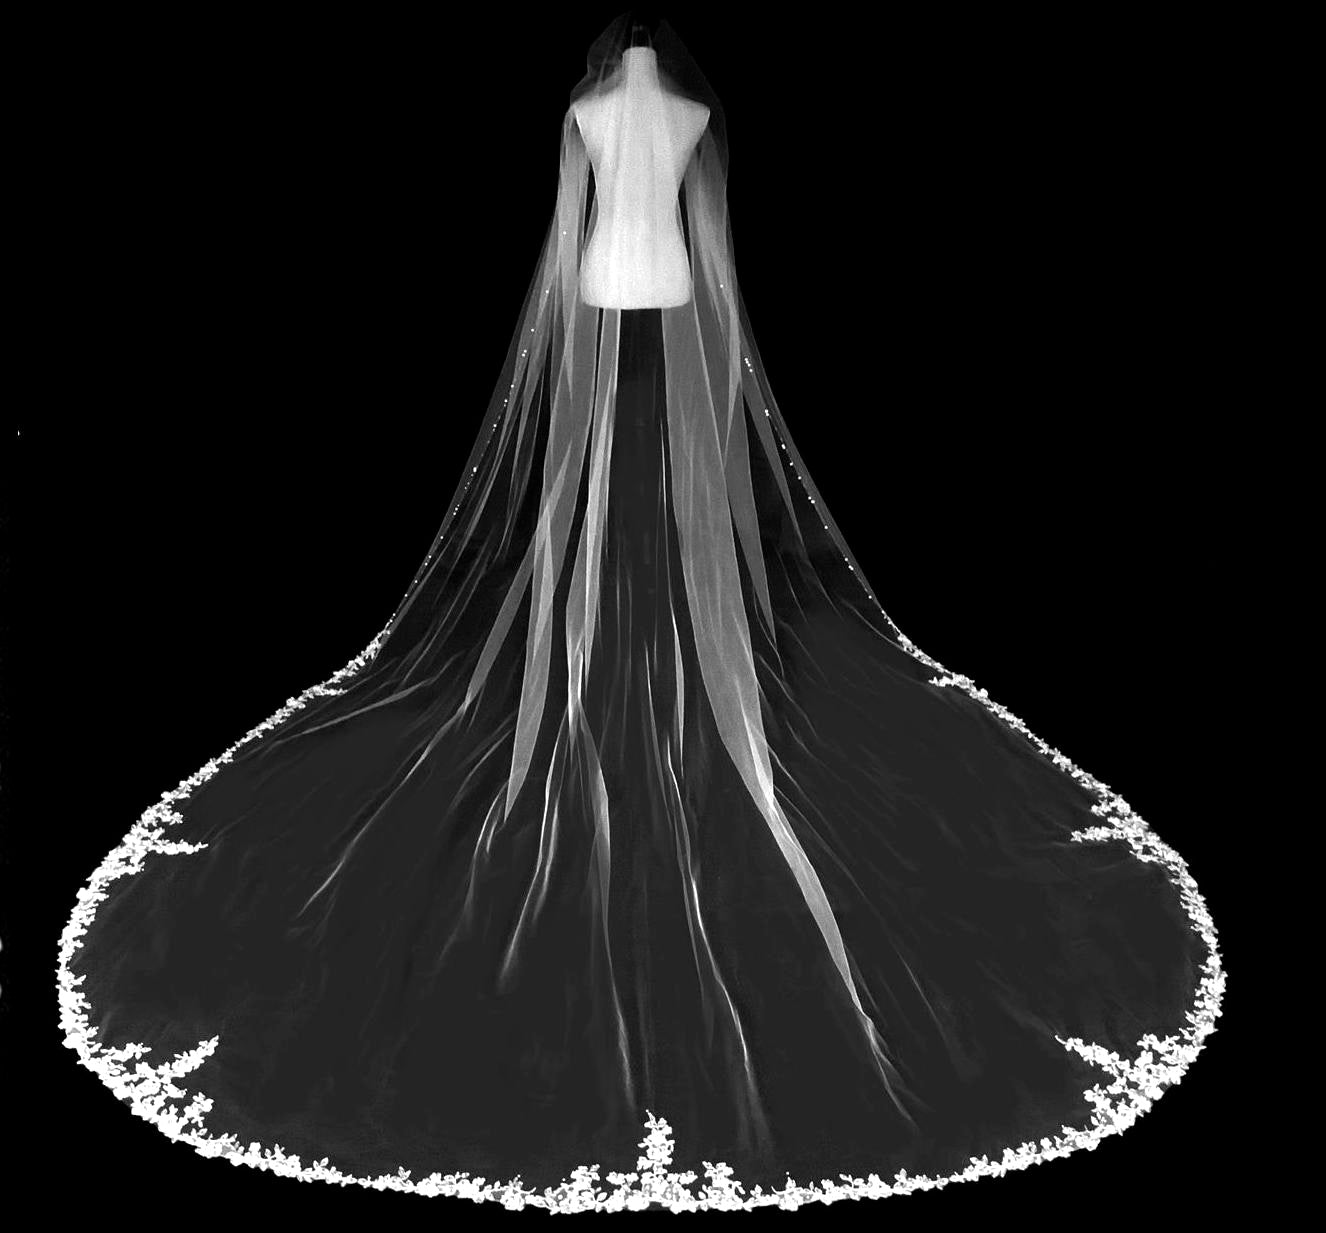 Ambrosia - Regal Cathedral Flower lace trim wedding veil